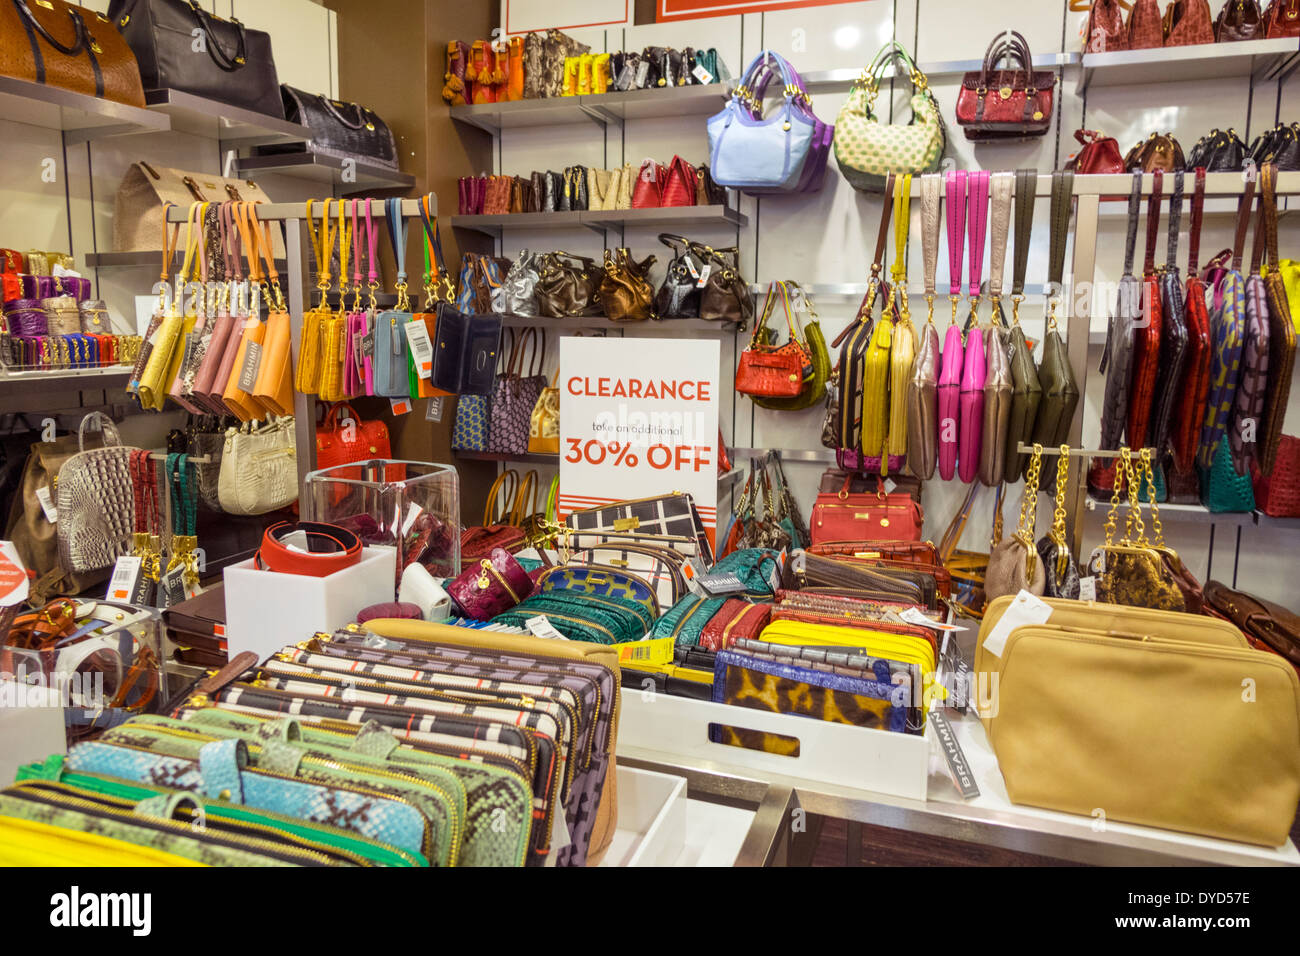 Brahmin Bags Outlet Store Online - Brahmin Handbags On Sale Outlet